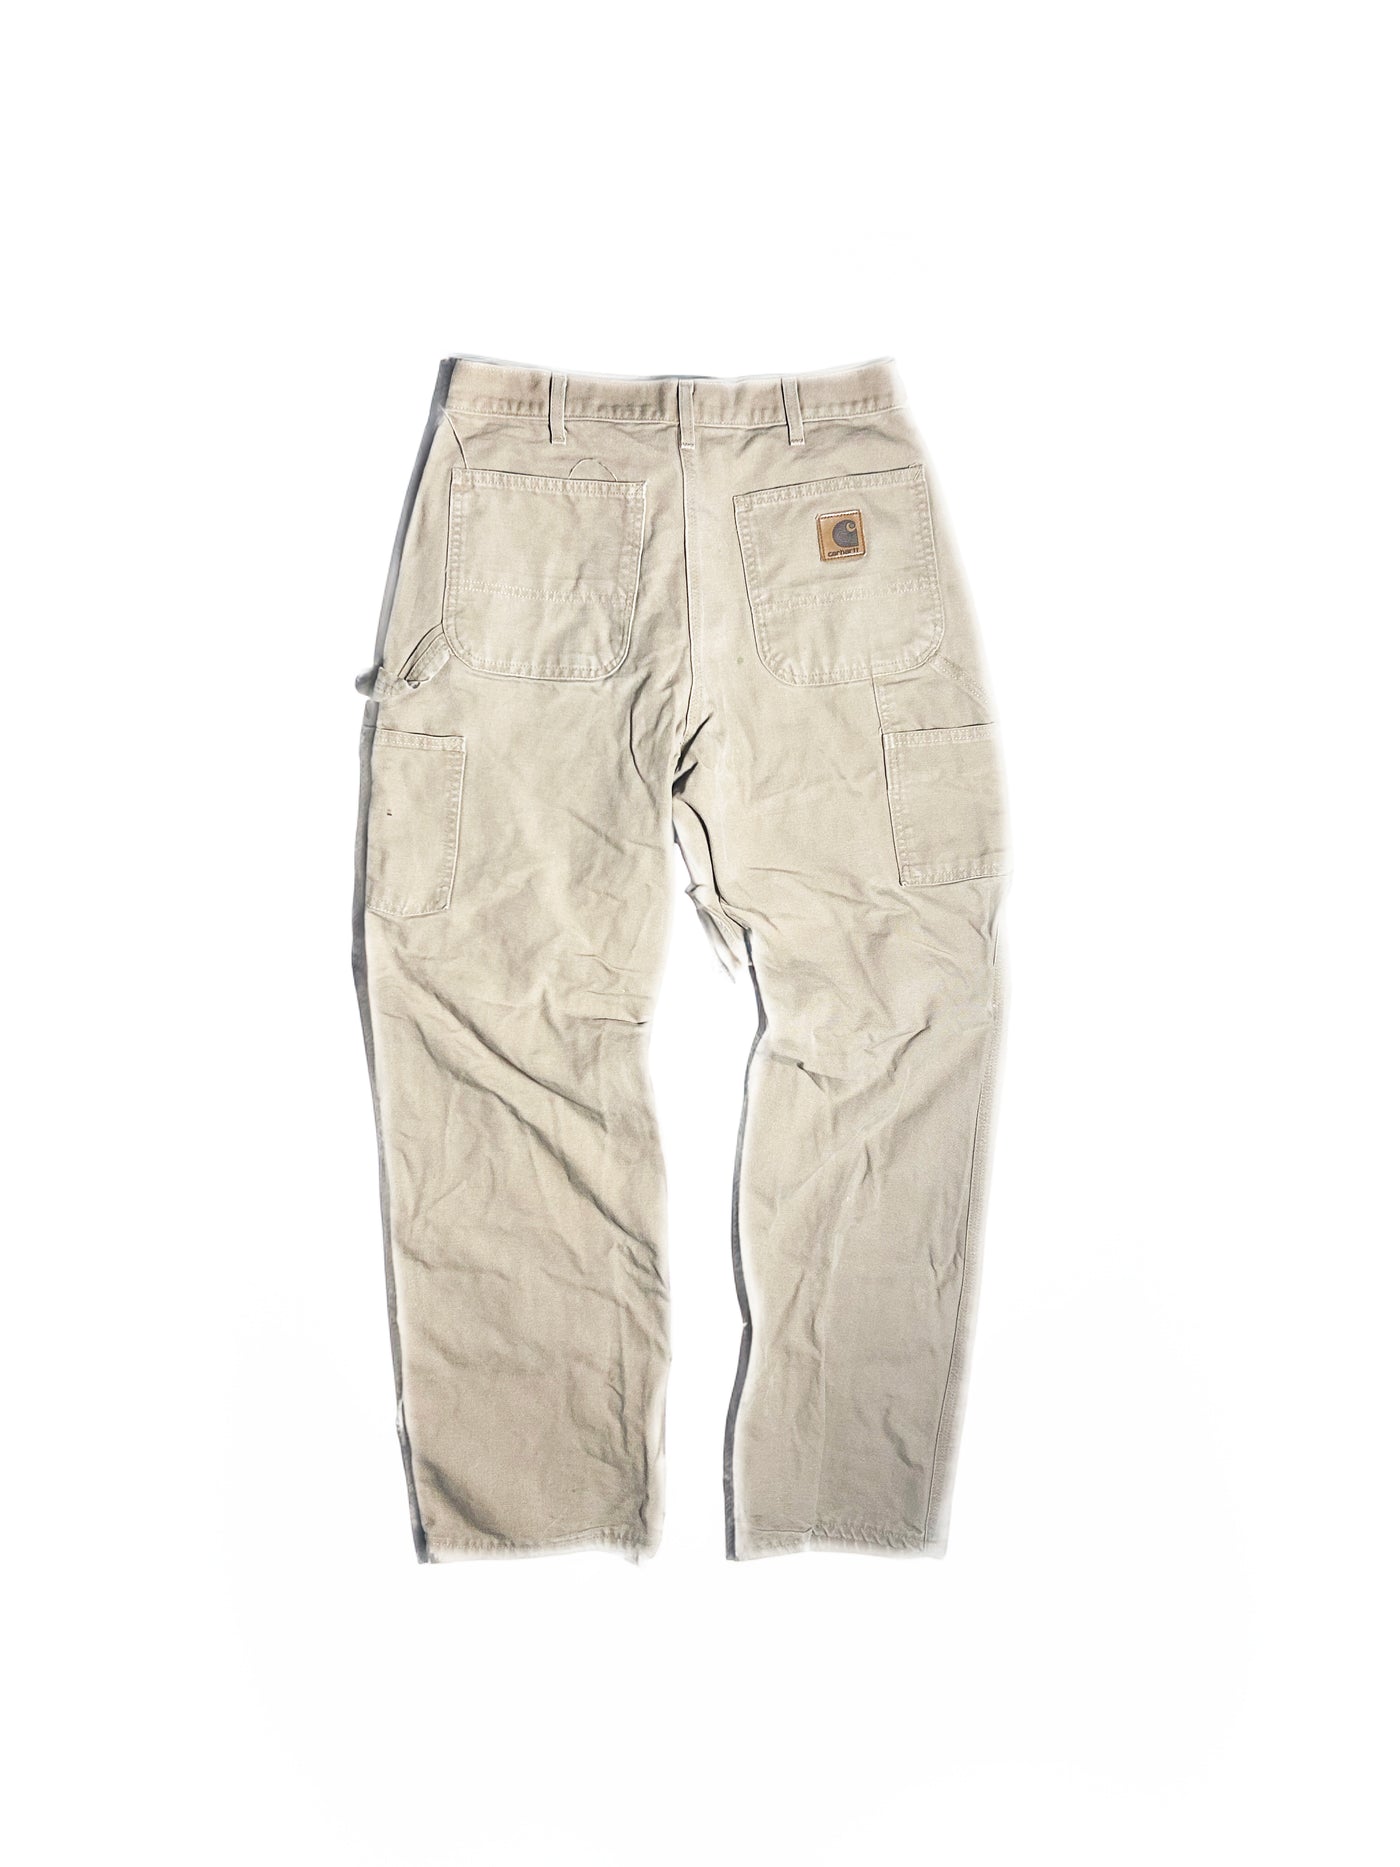 Vintage 90s Distressed Carhartt Pants - Tan